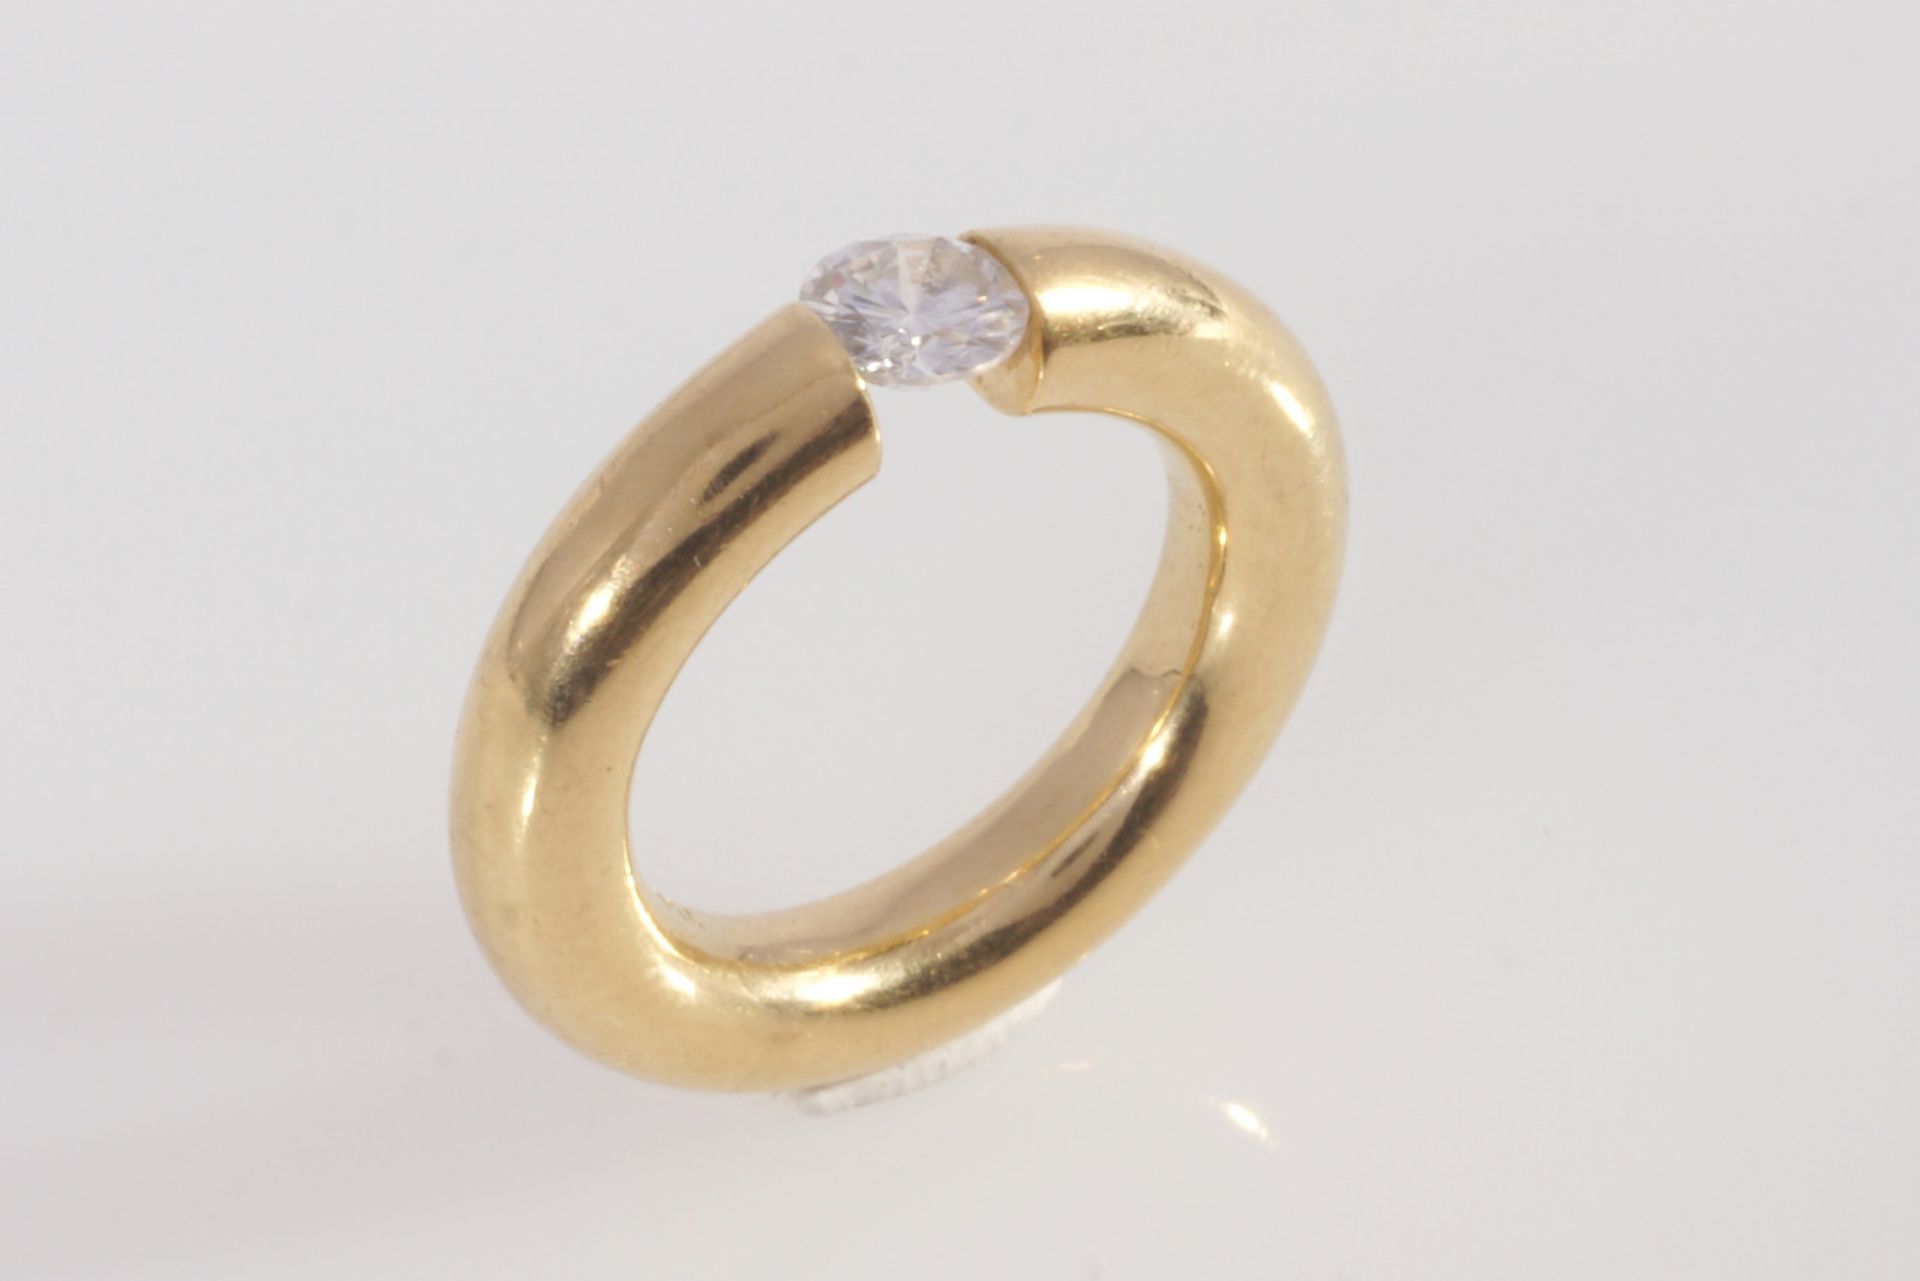 750 Gold Spannring mit Brillant 0,75ct, Niessing Art, Solitärring, 18K gold clamping ring diamond, - Image 3 of 4